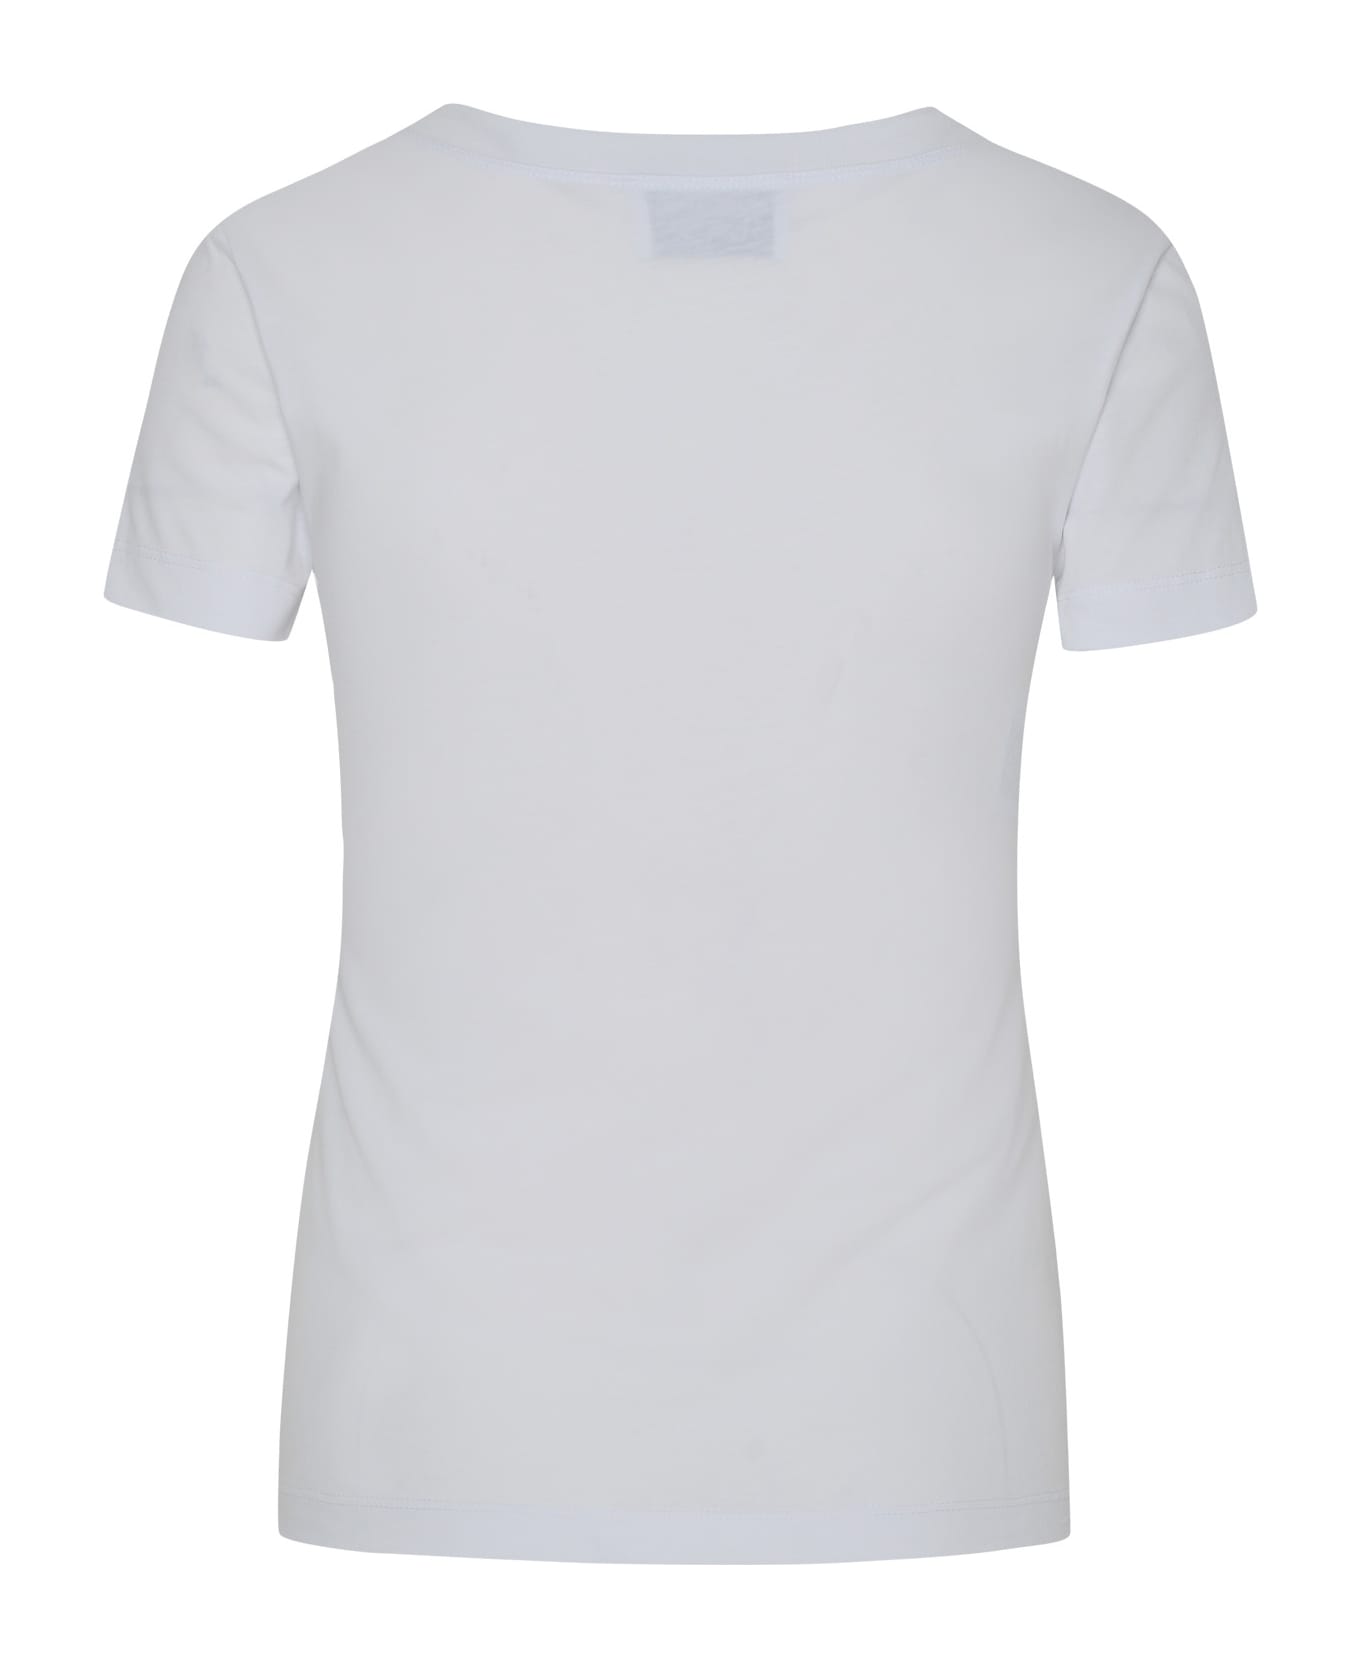 M05CH1N0 Jeans White Cotton T-shirt - White